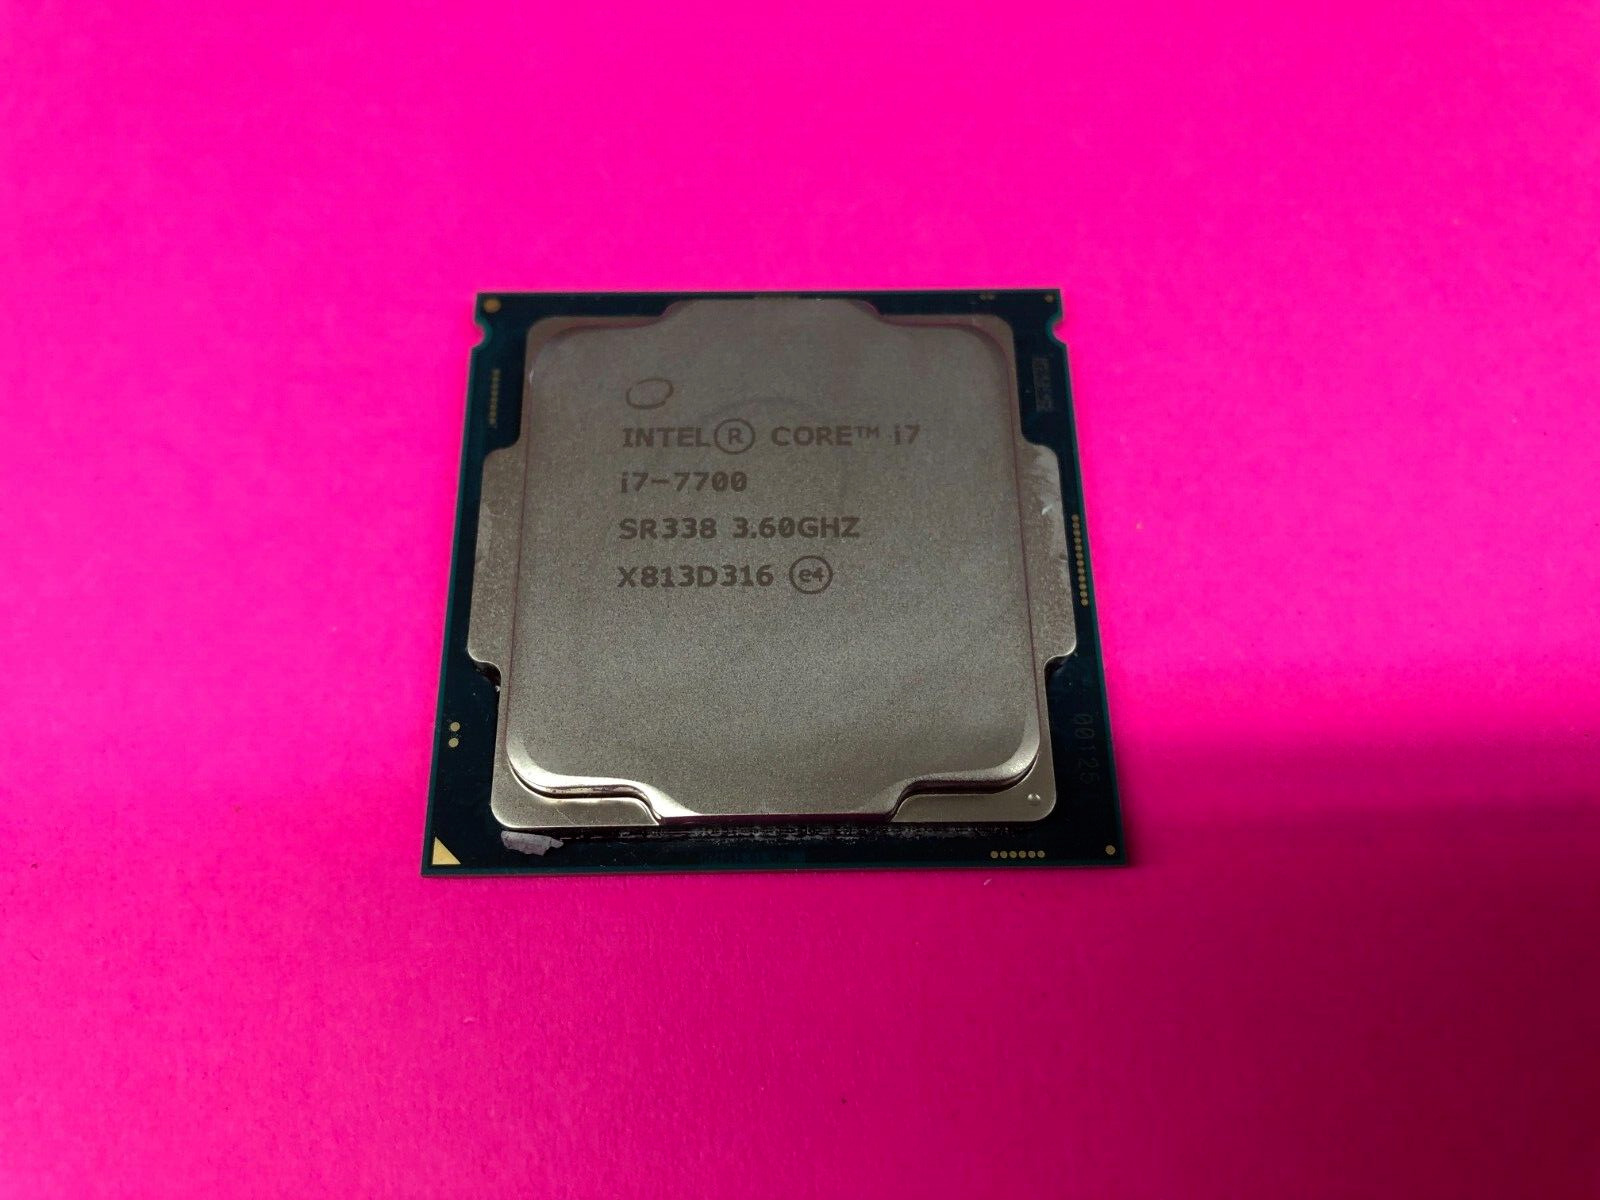 FULLY TESTED  Intel i7-7700 Quad-core 3.6GHz  SR338 LGA 1151 Desktop Processor